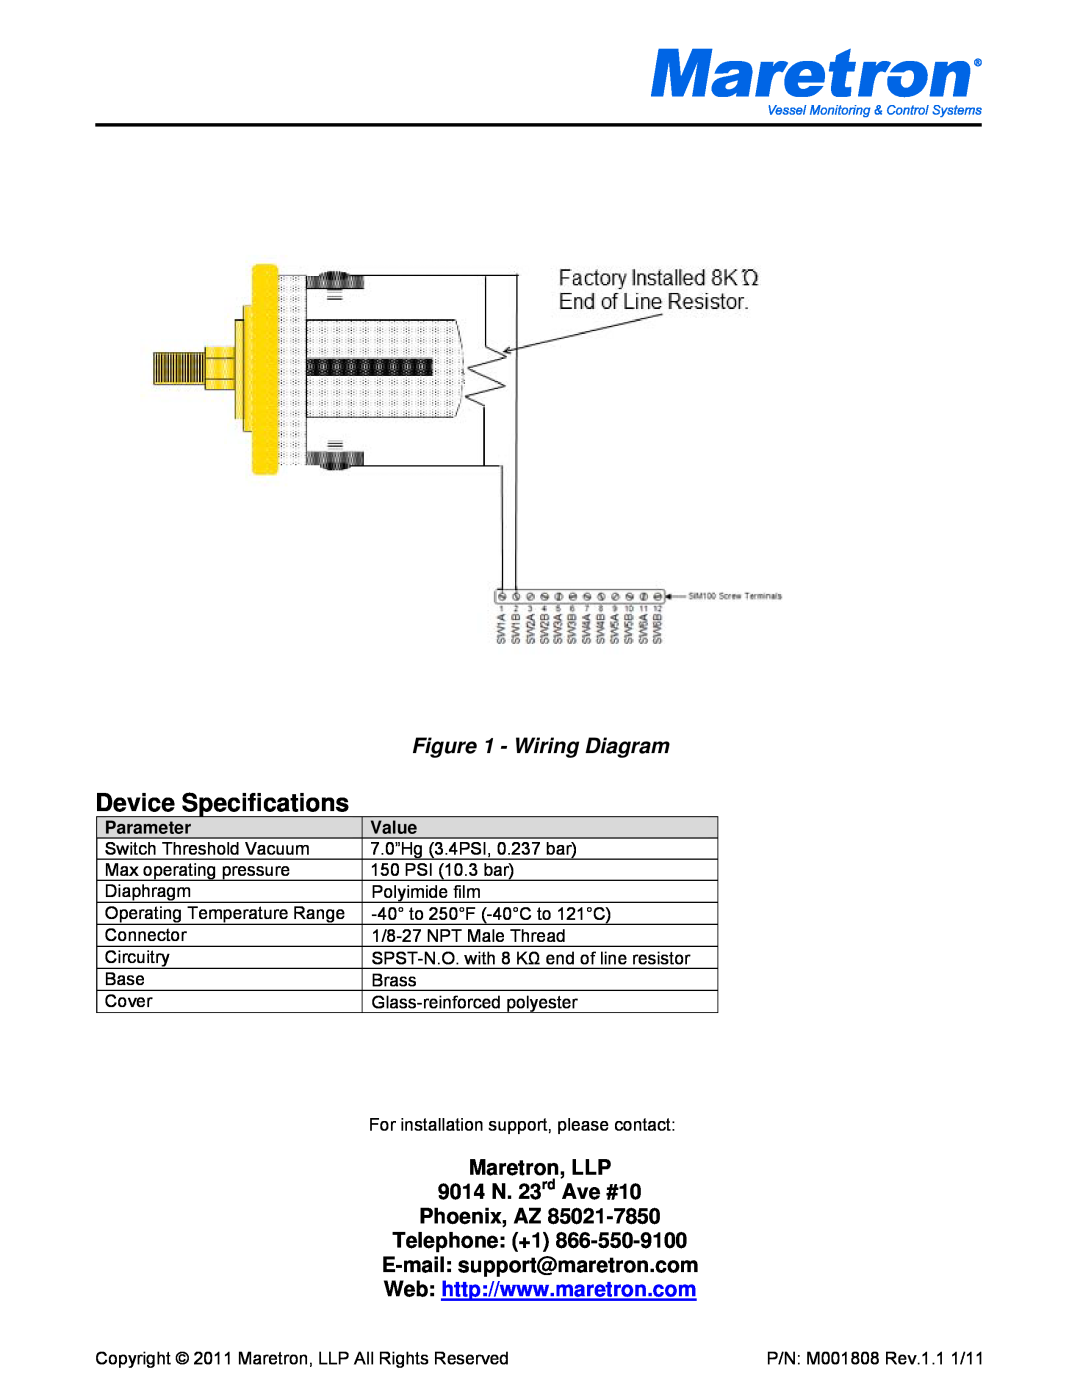 Maretron VS-07.0HG Device Specifications, Maretron, LLP 9014 N. 23rd Ave #10 Phoenix, AZ, Parameter, Value, Wiring Diagram 